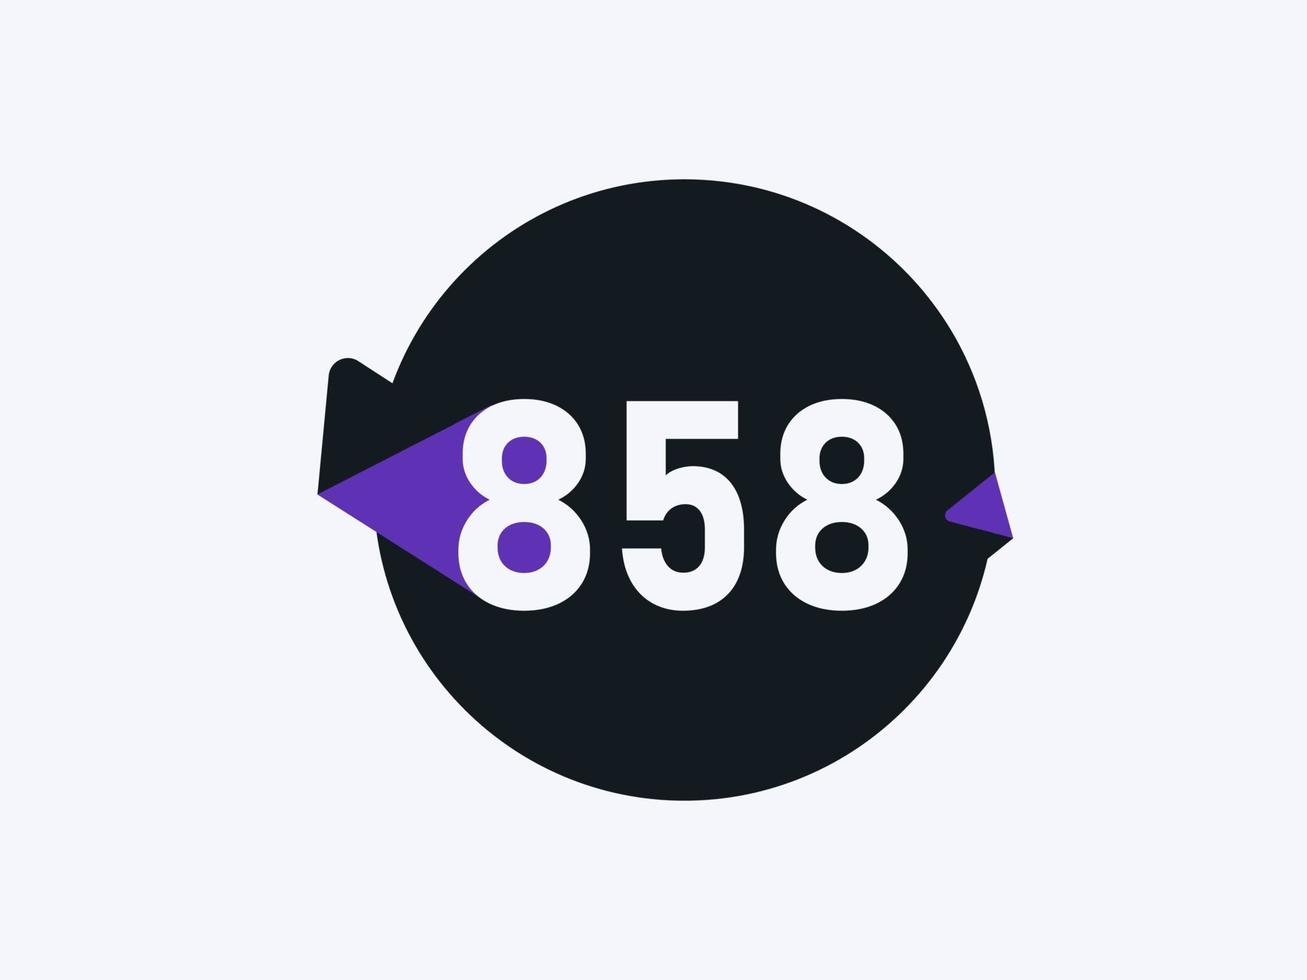 858 Number logo icon design vector image. Number logo icon design vector image